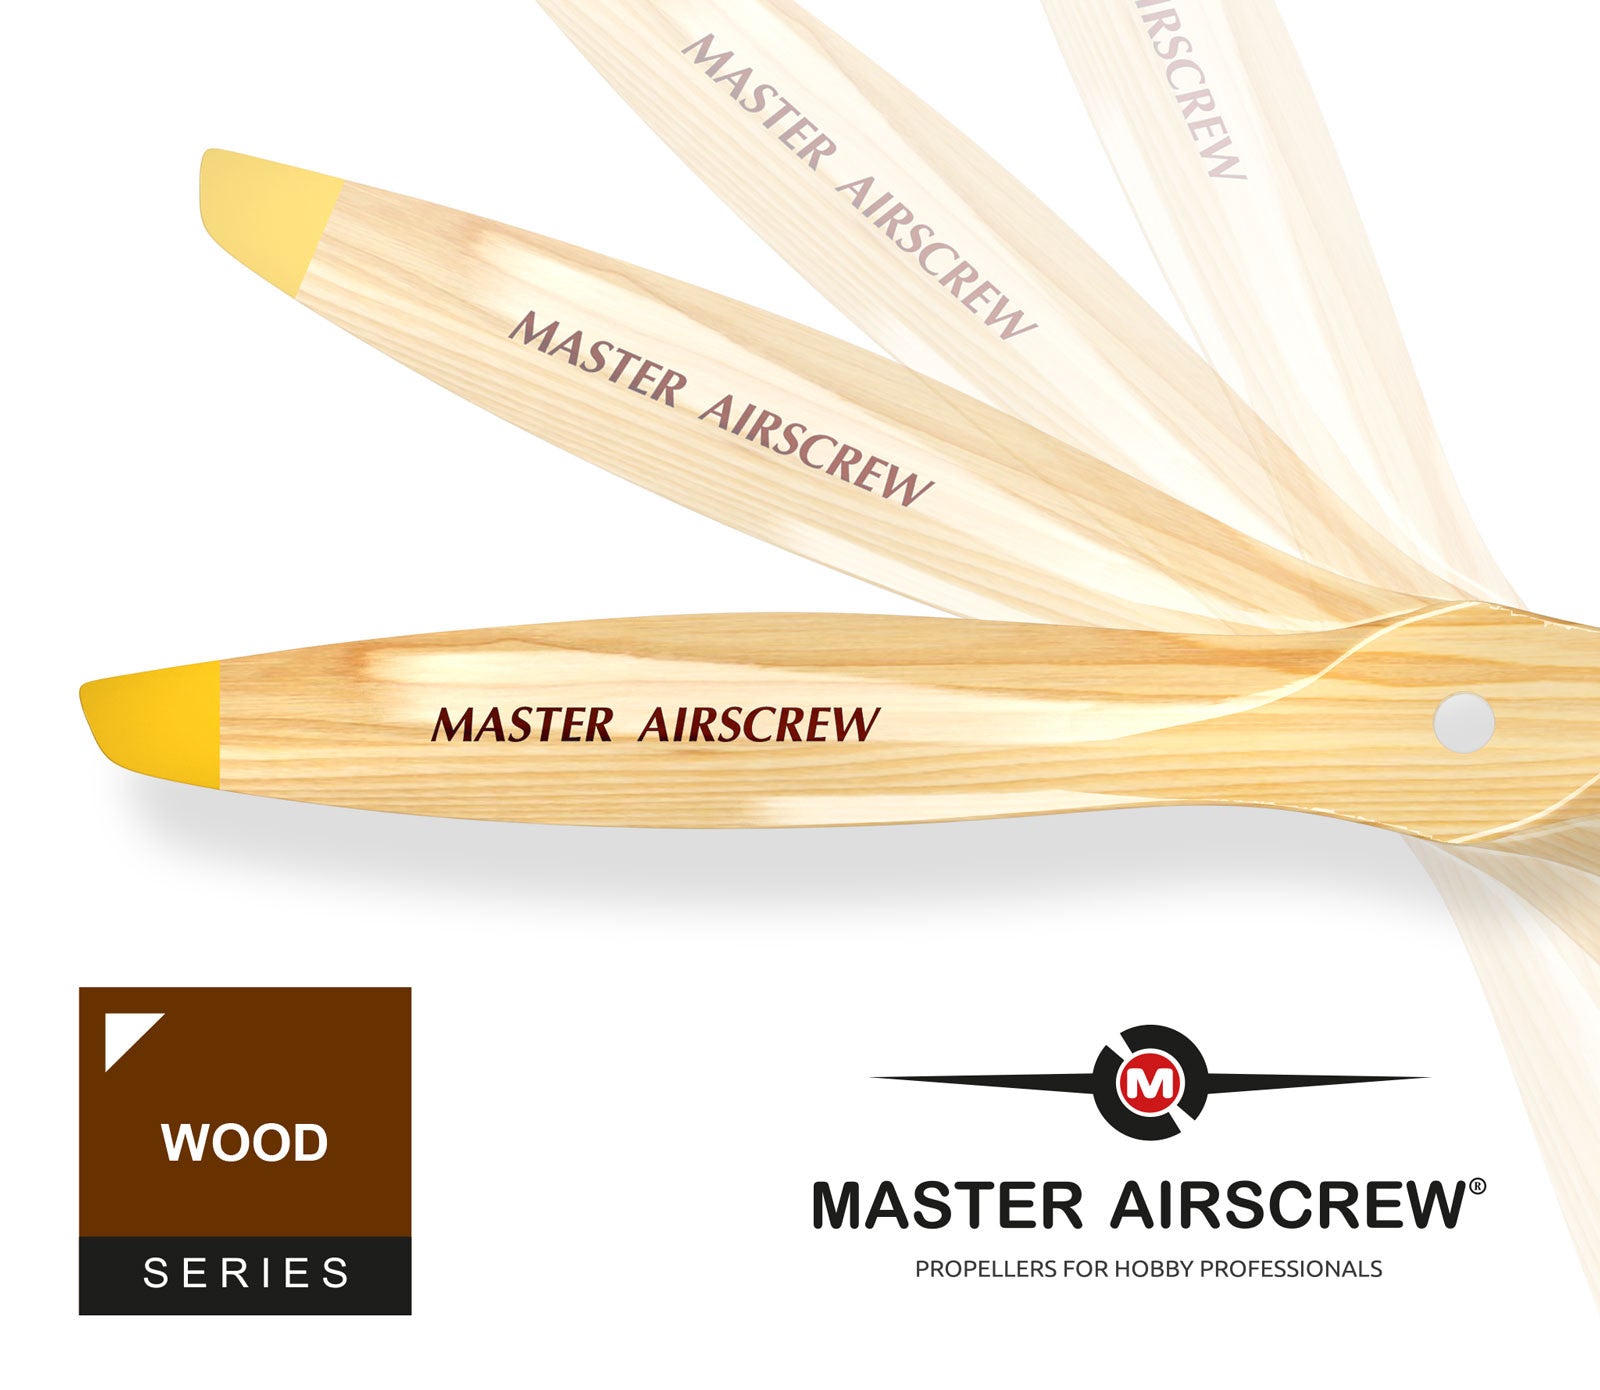 Wood-Maple - 22x8 Propeller - Master Airscrew